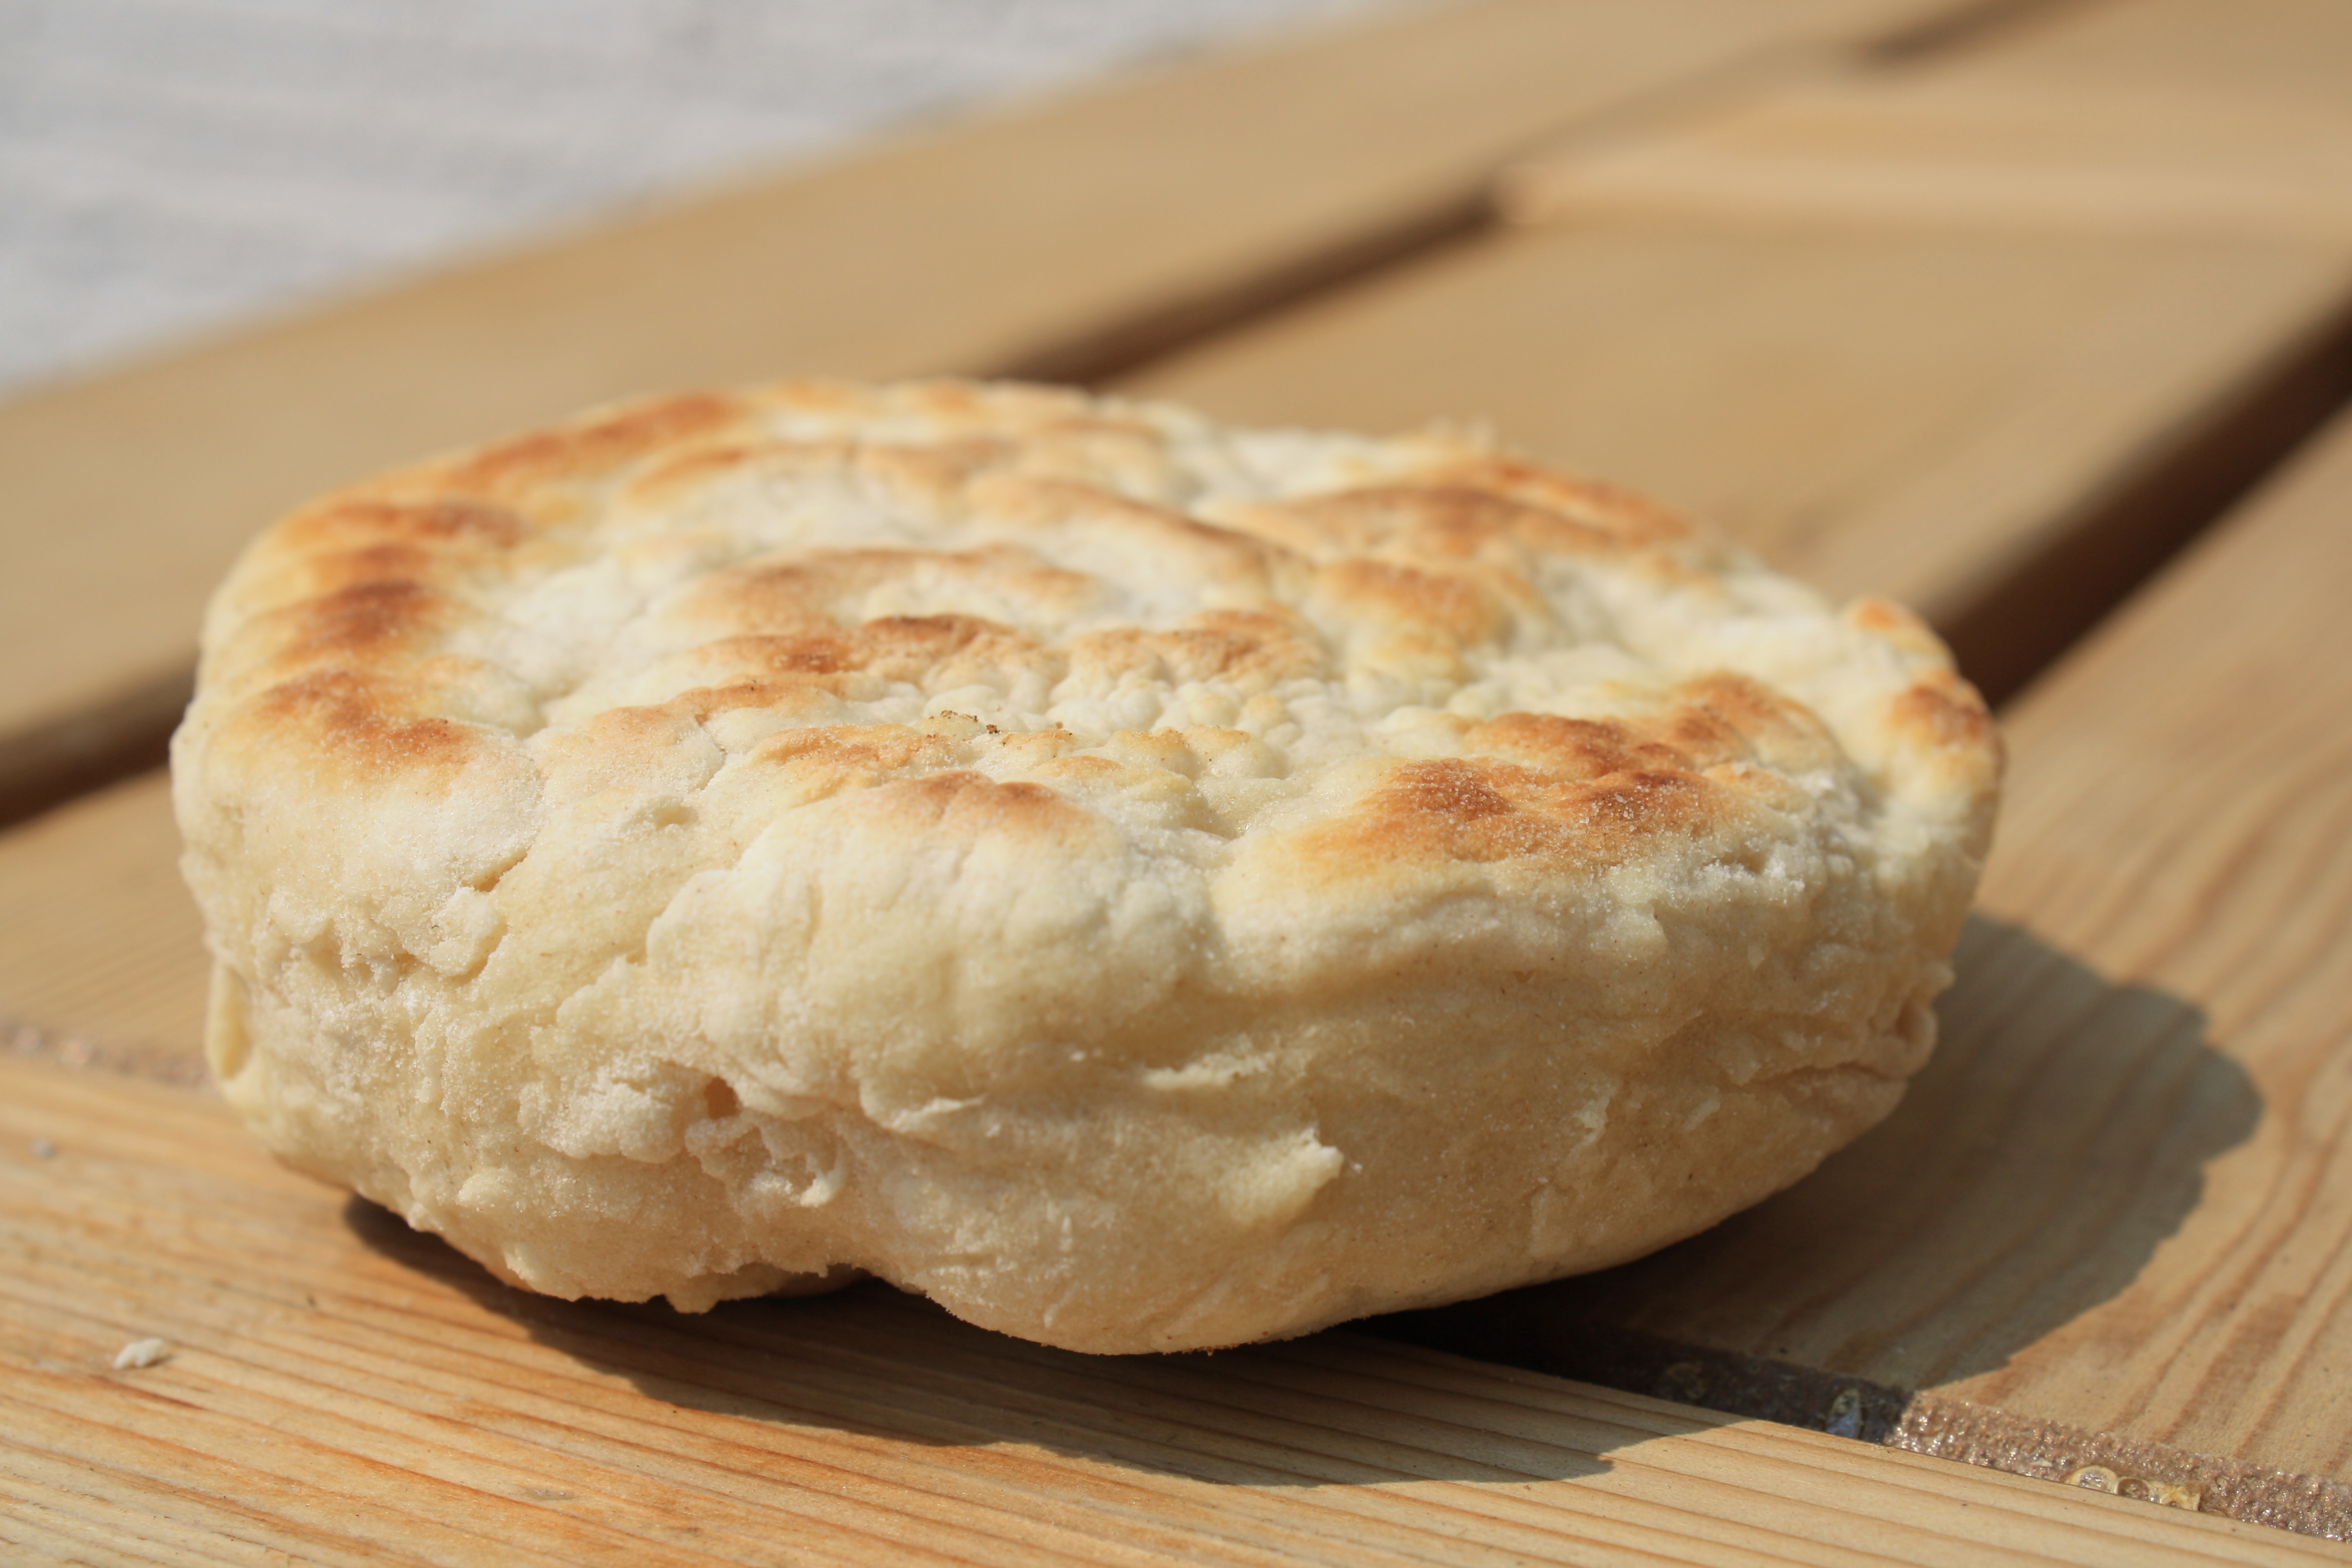 What's a recipe for Cree bannock bread?